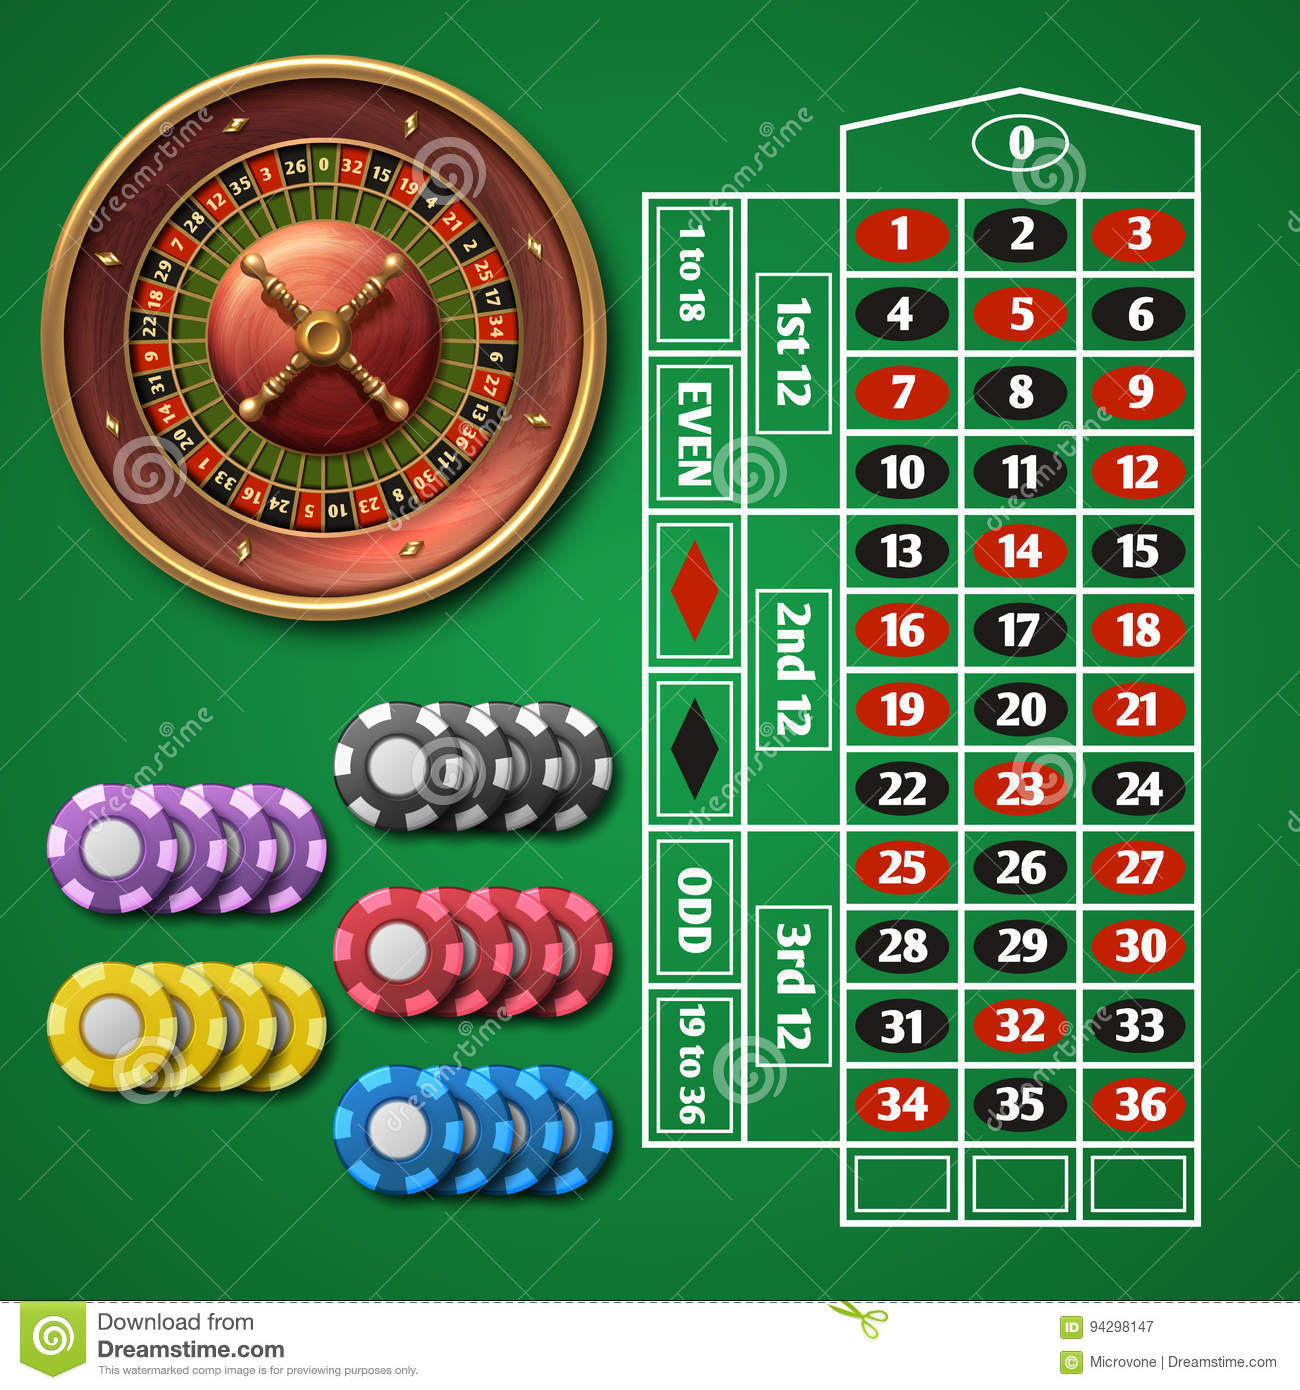 Jackpotcity casino